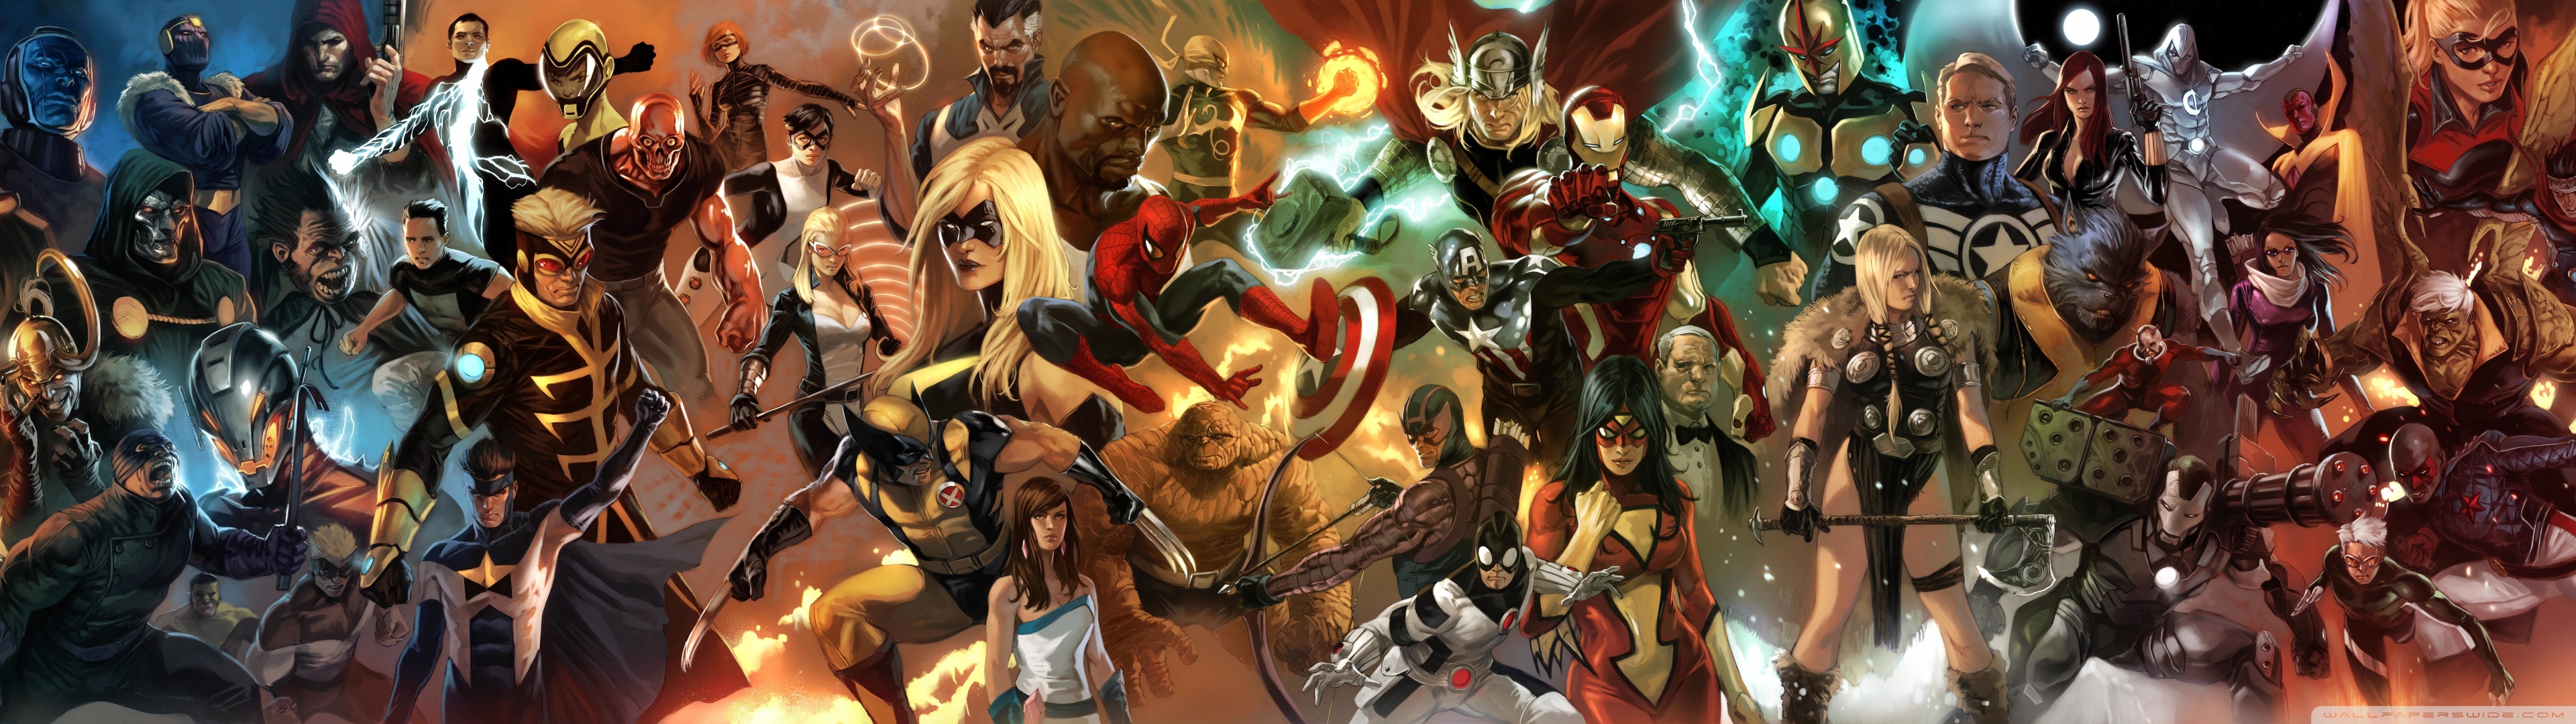 Desktopas Marvel Ics Characters Wallpaper Html